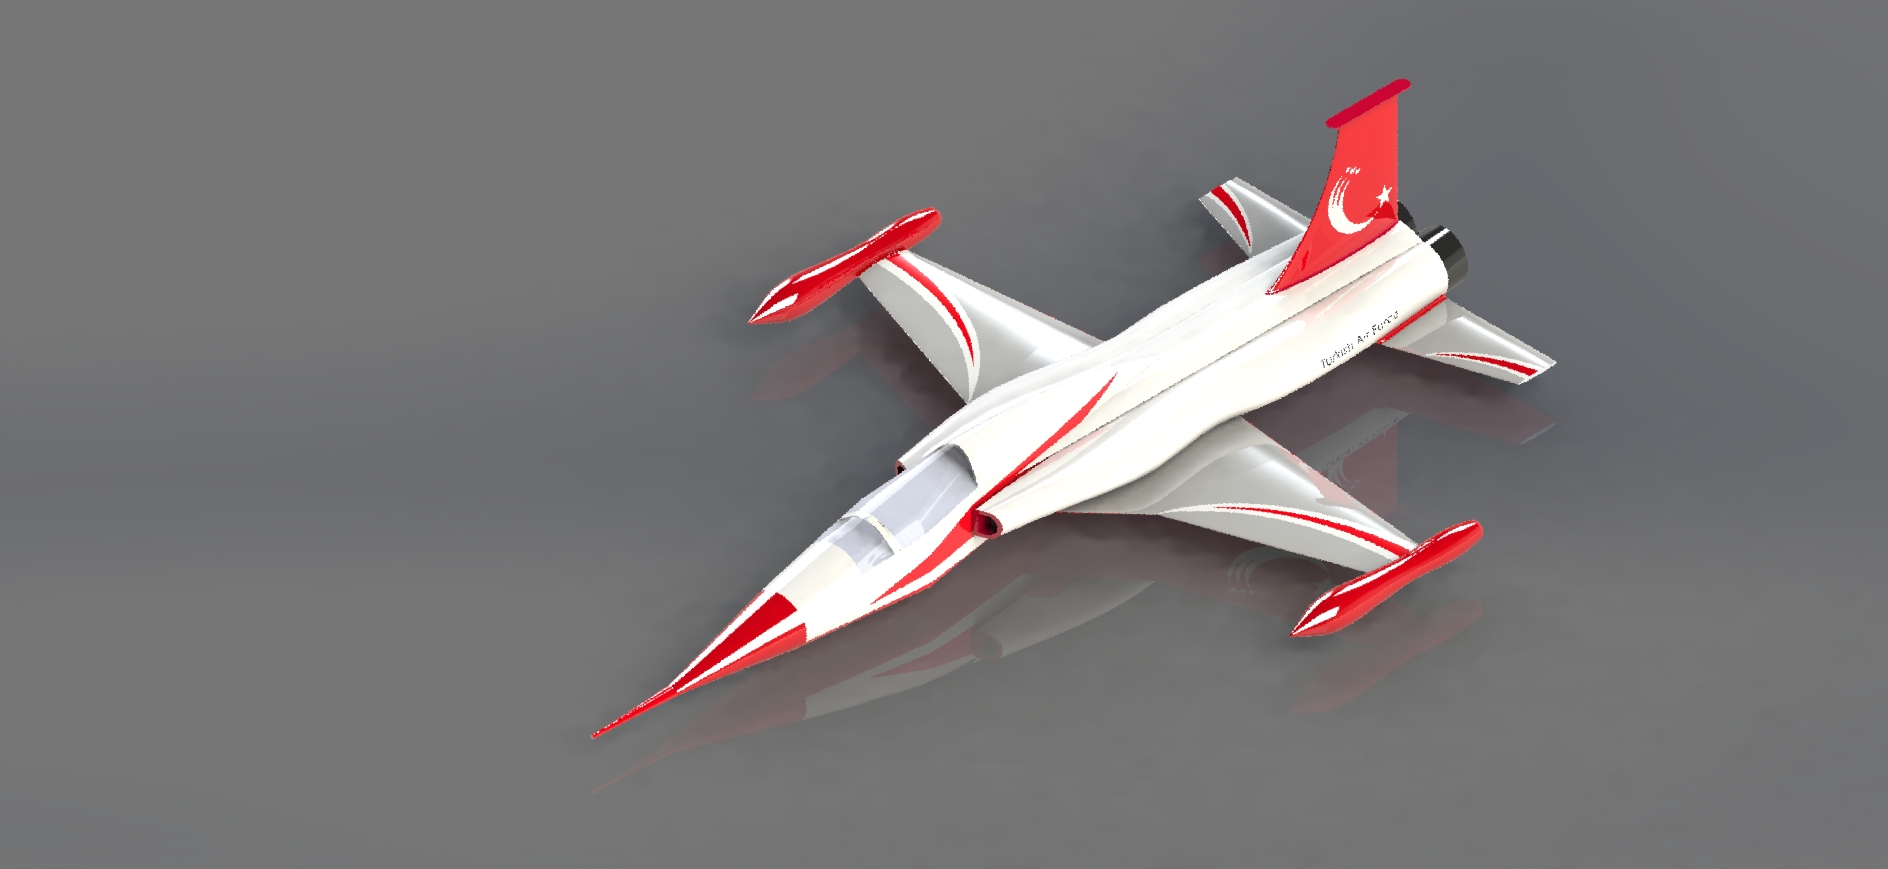 turk土耳其战机